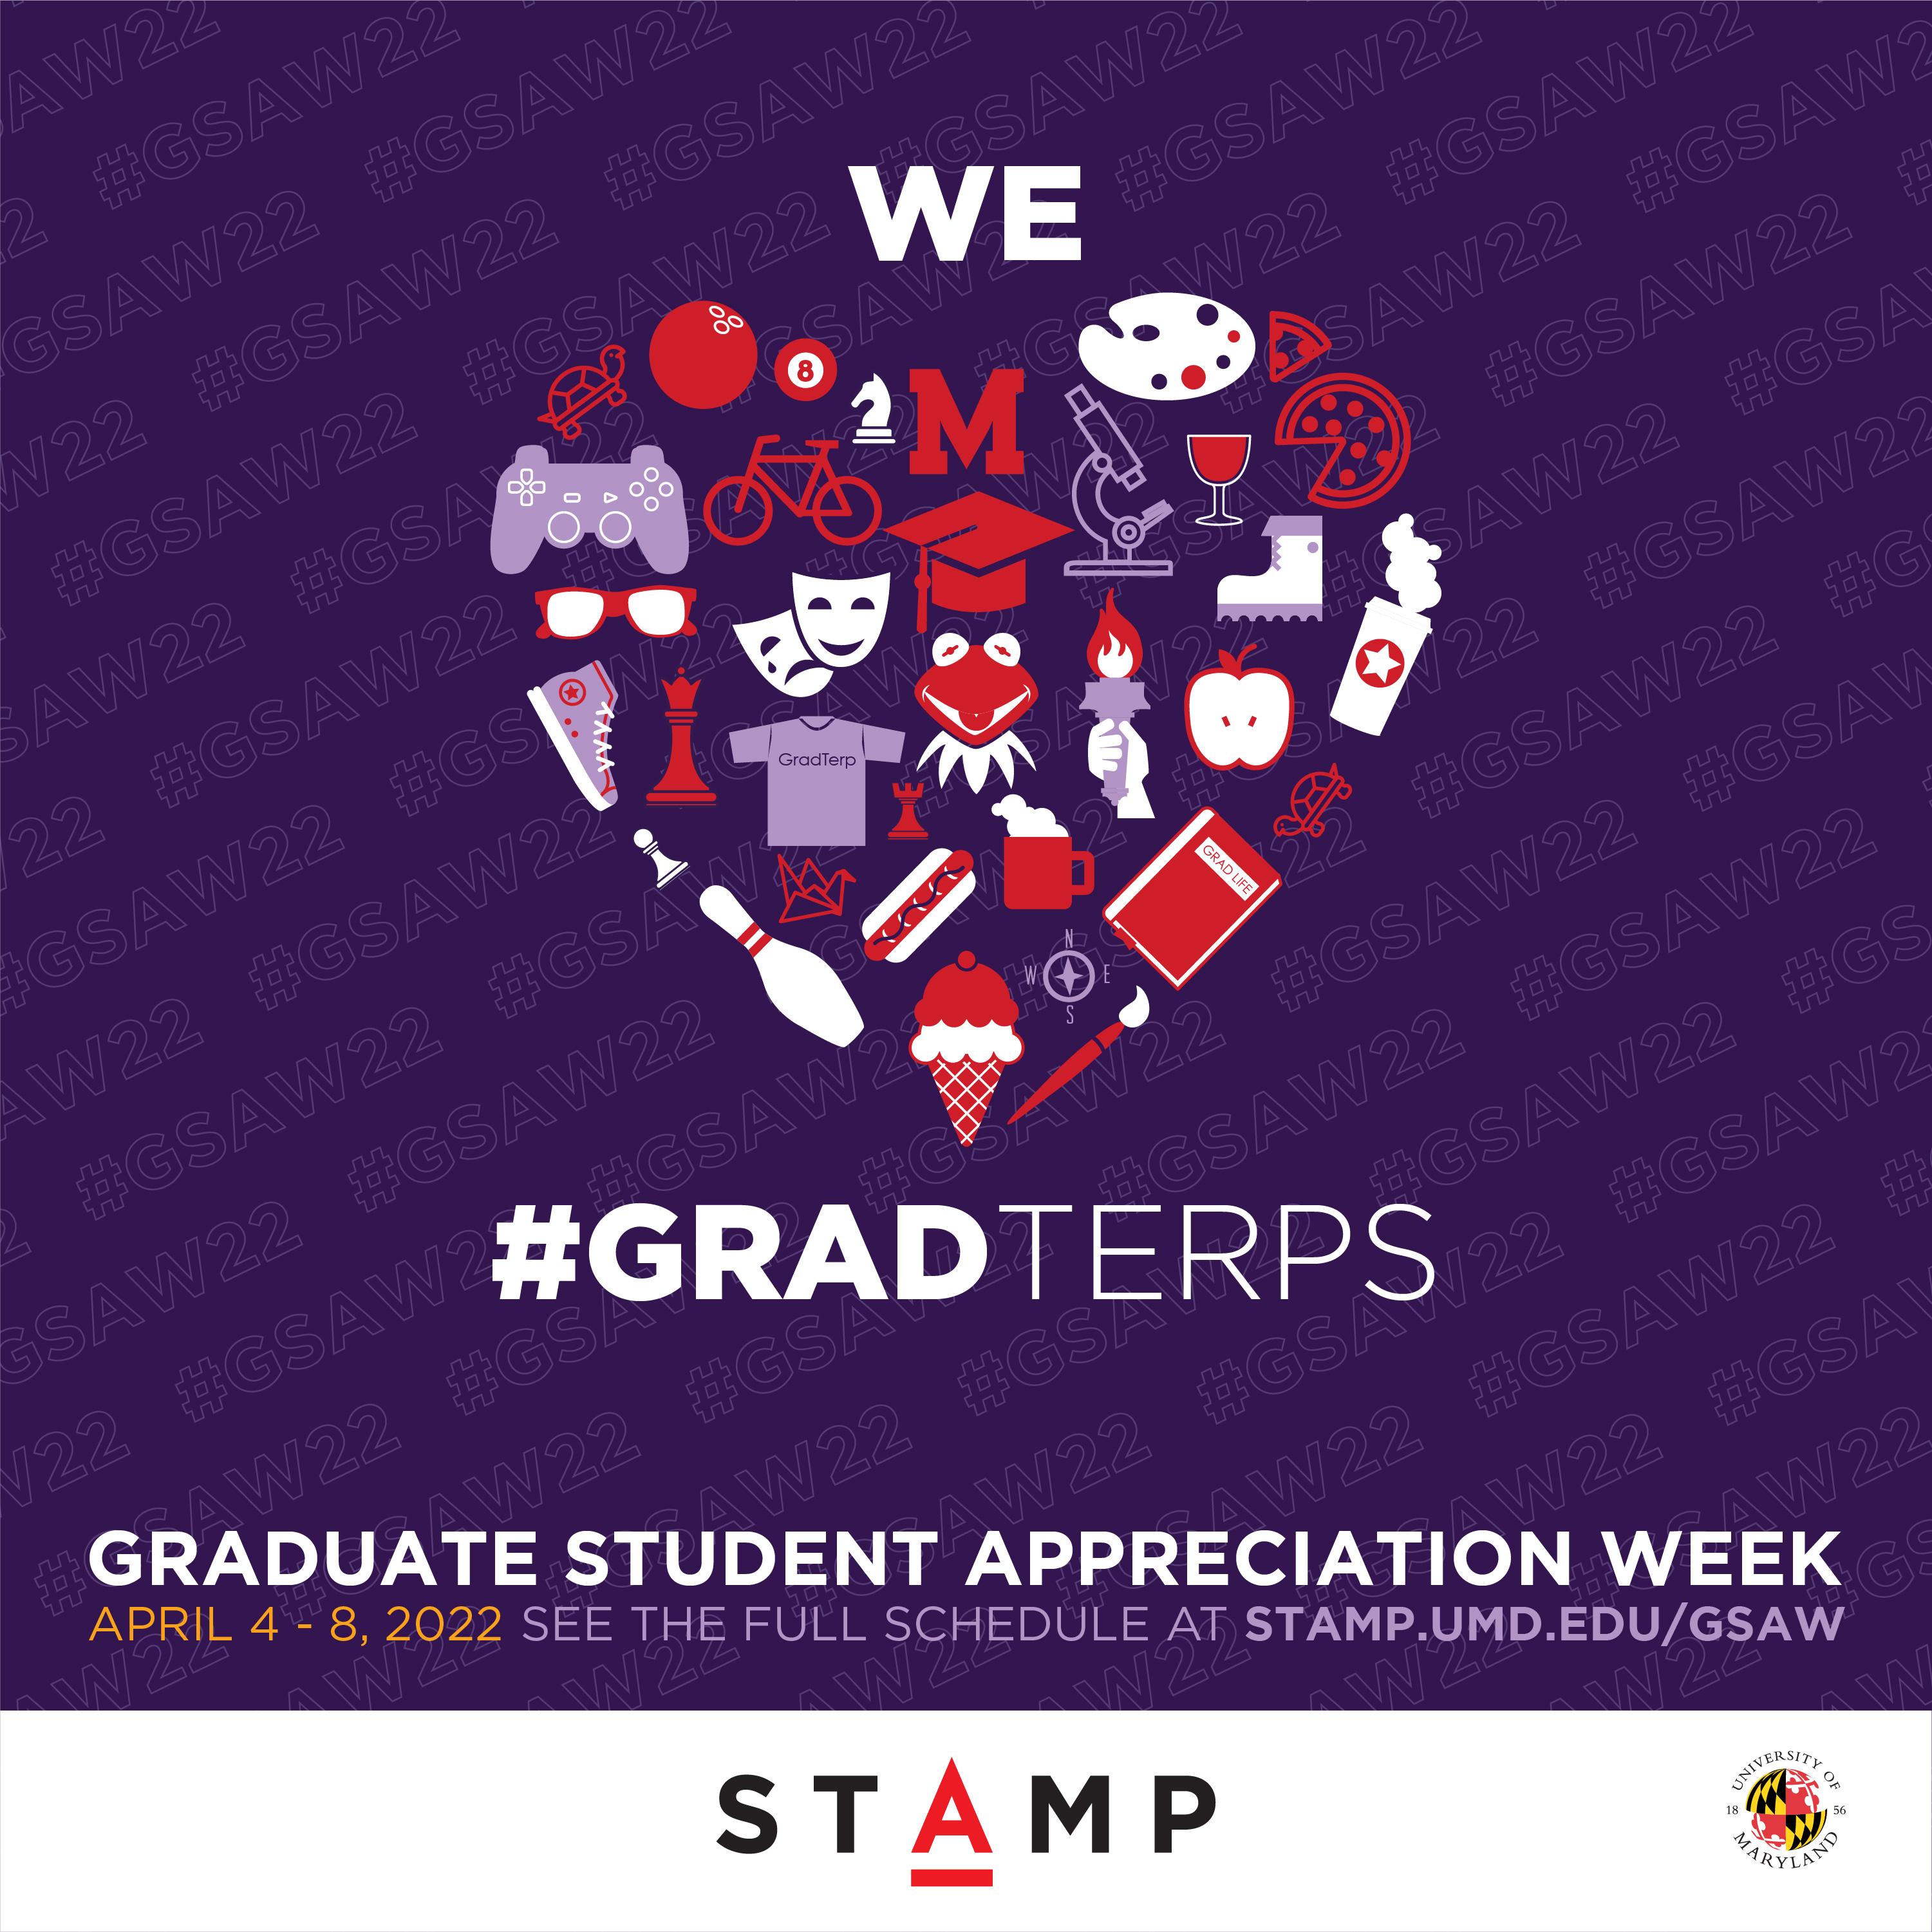 Graduate Student Appreciation Week Adele H. Stamp Student Union